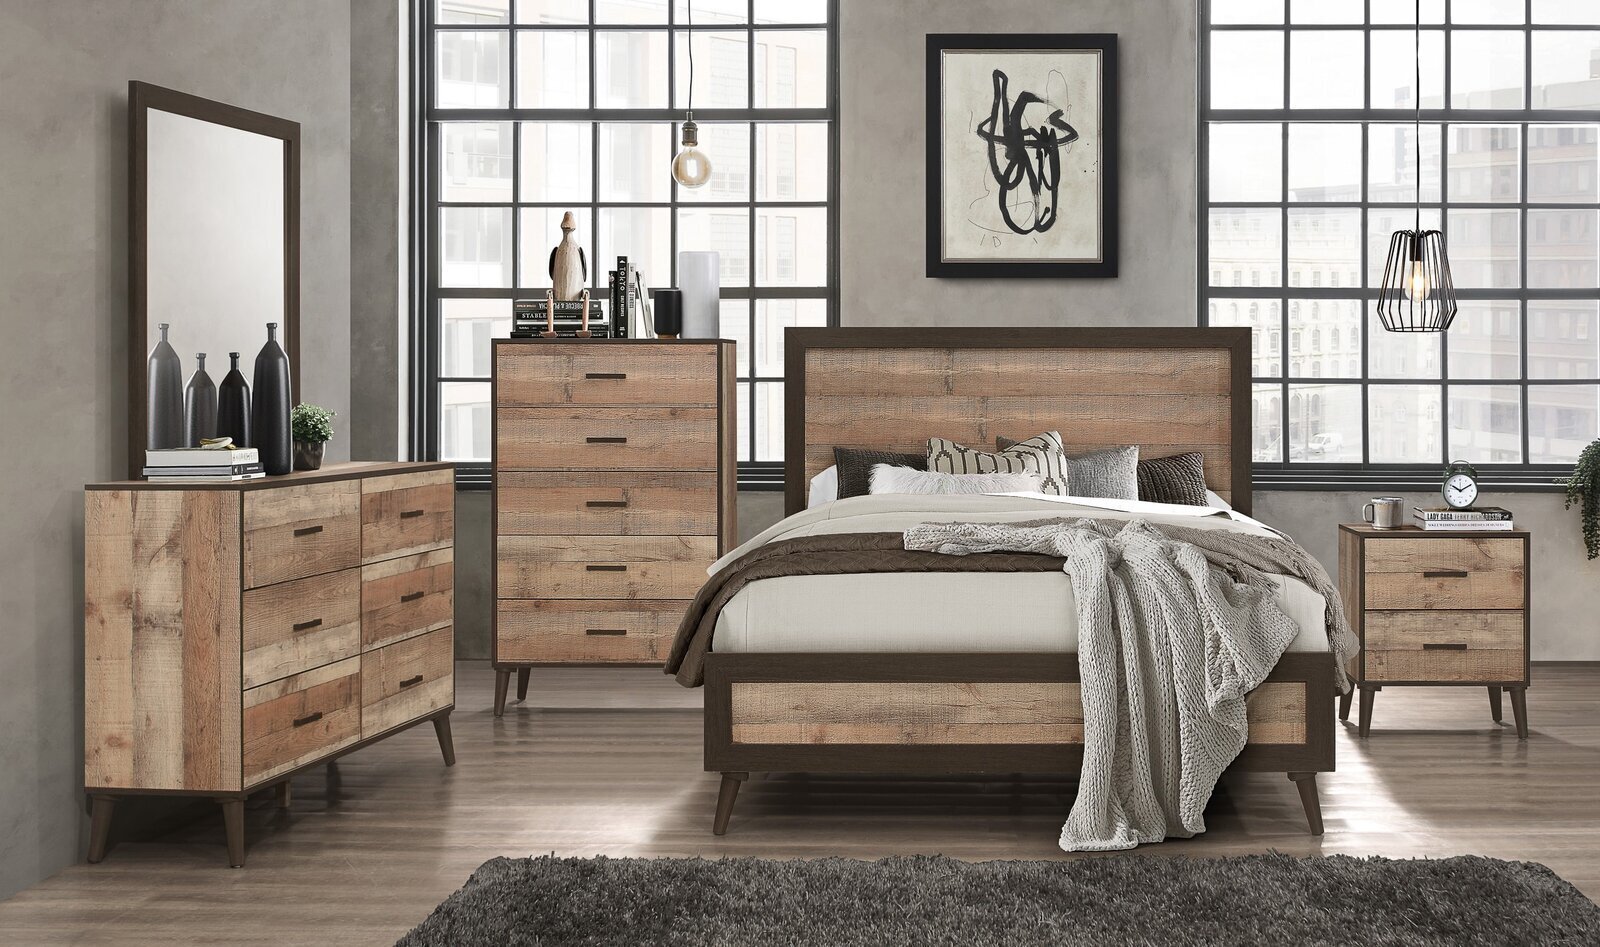 Industrial brown bedroom furniture decorating ideas